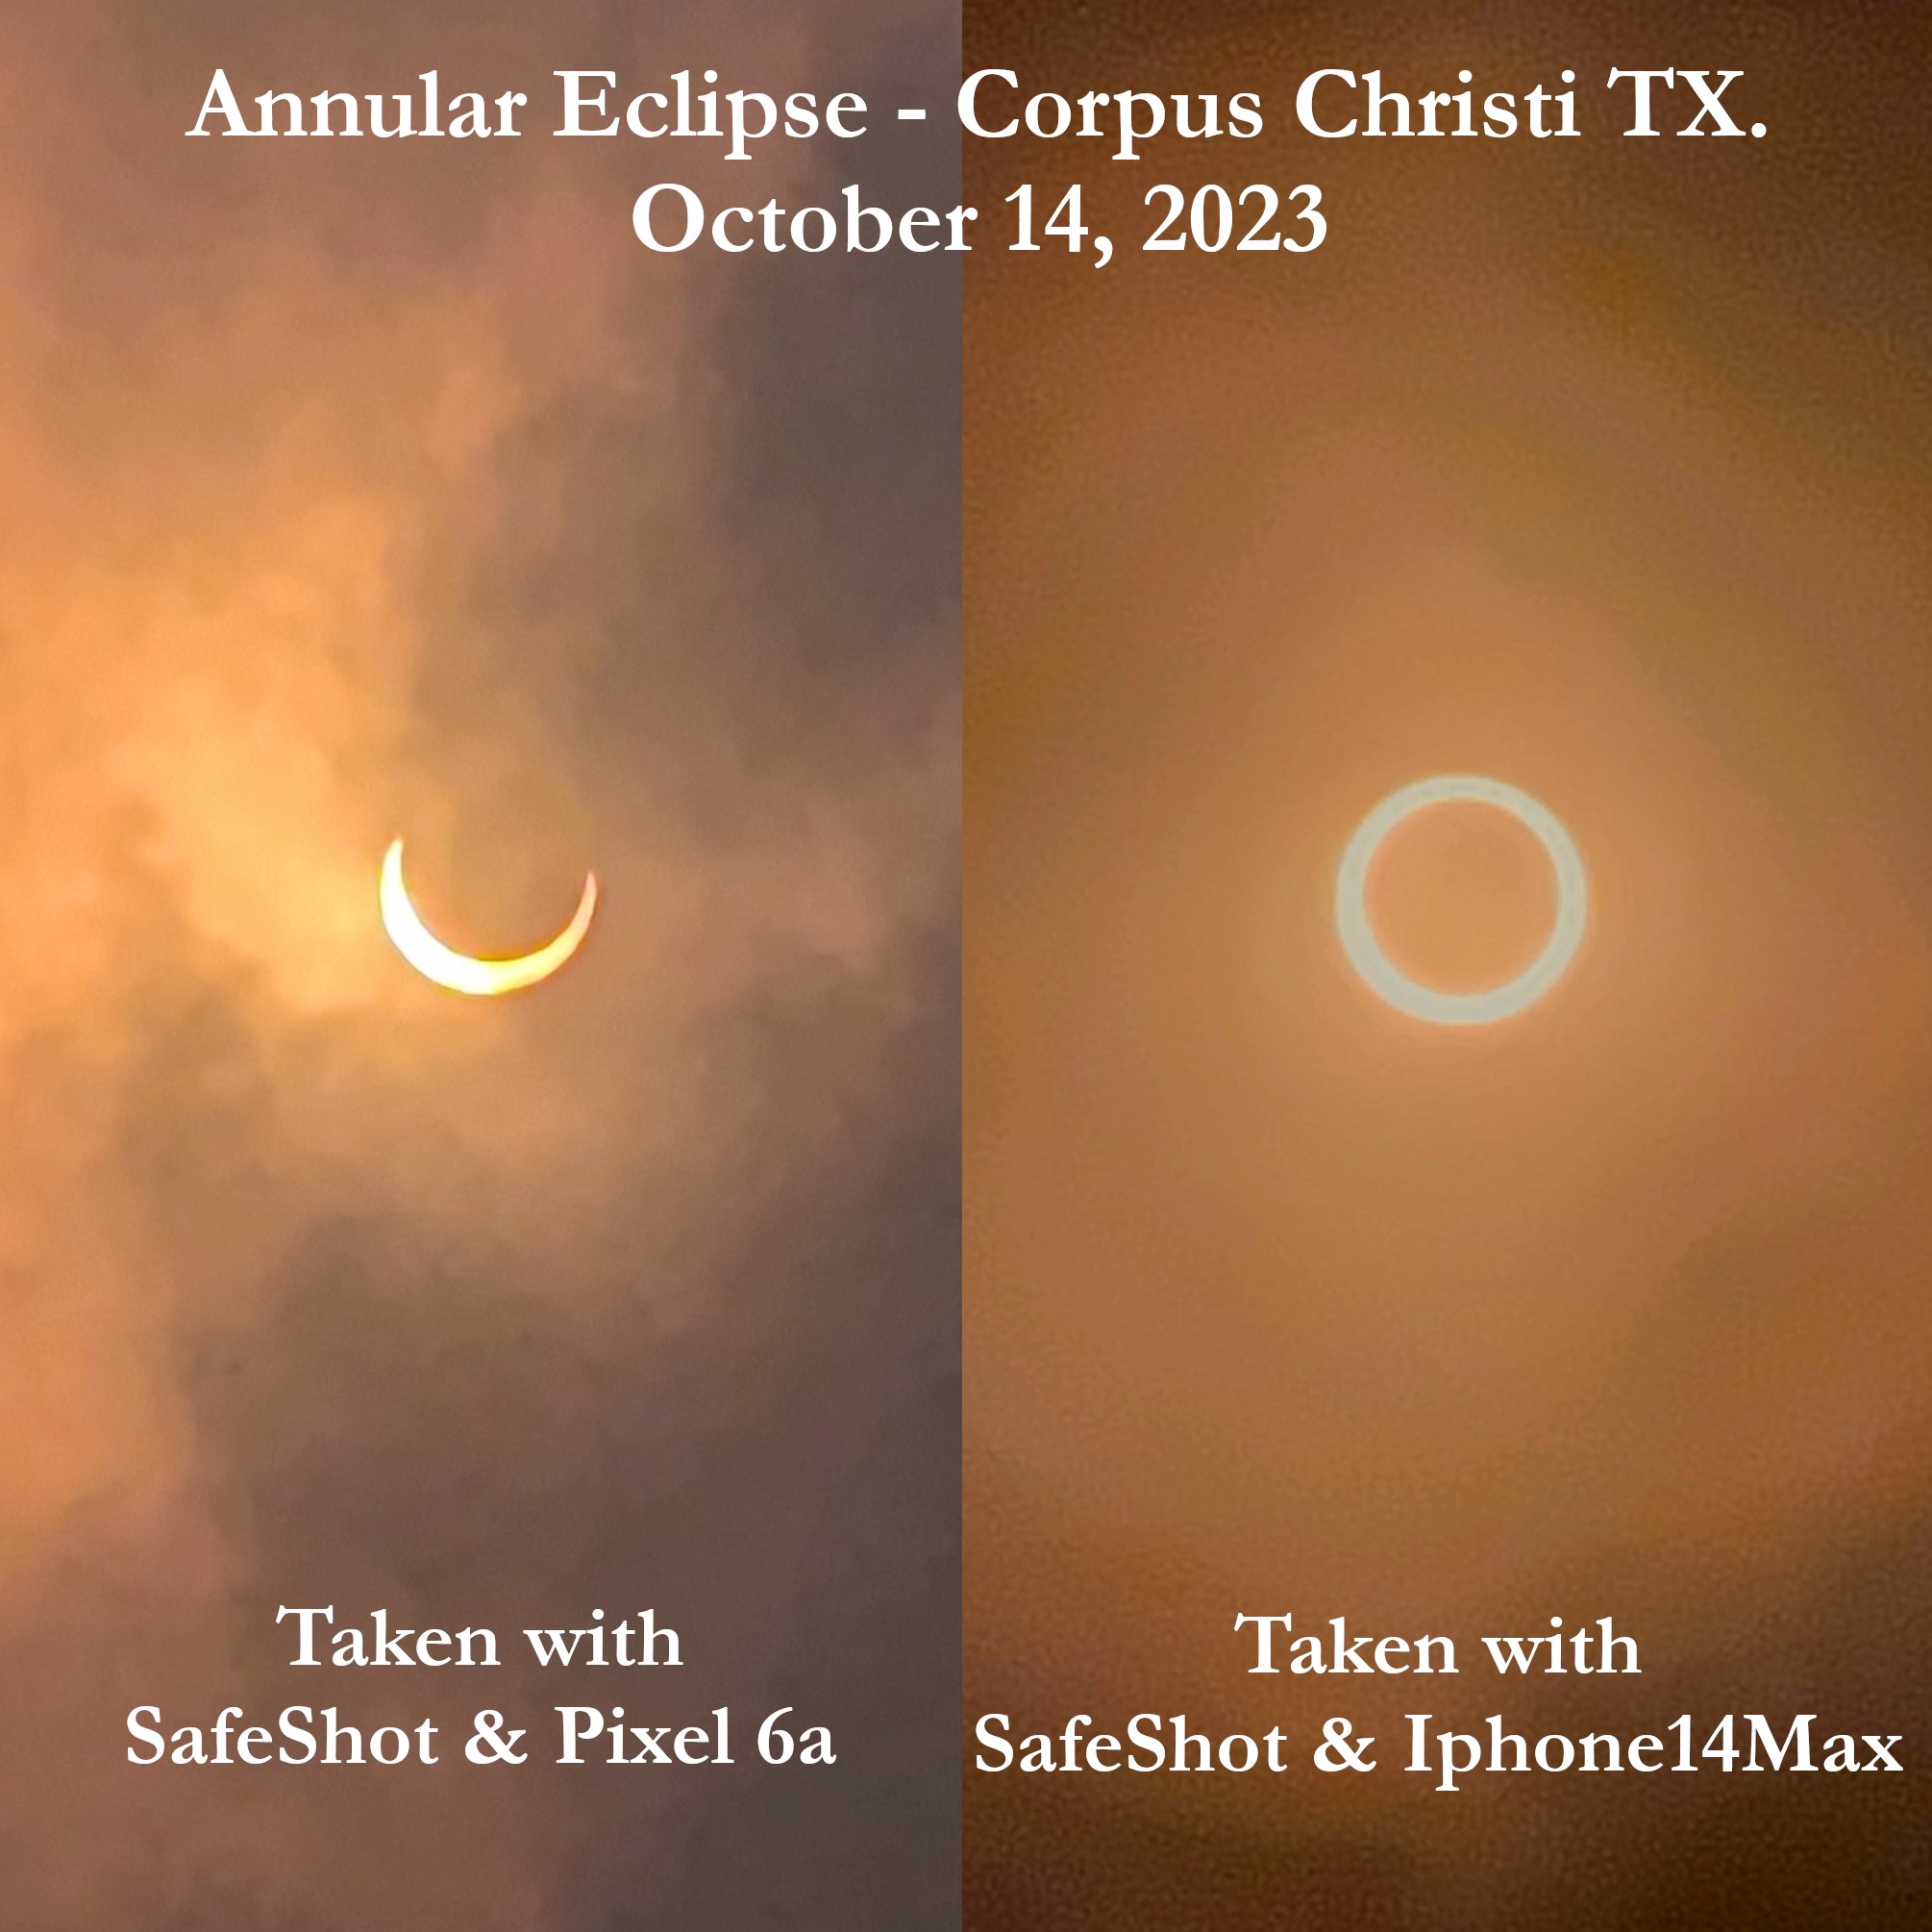 Annular solar eclipse images taken with Safeshot smartphone solar eclipse viewer.